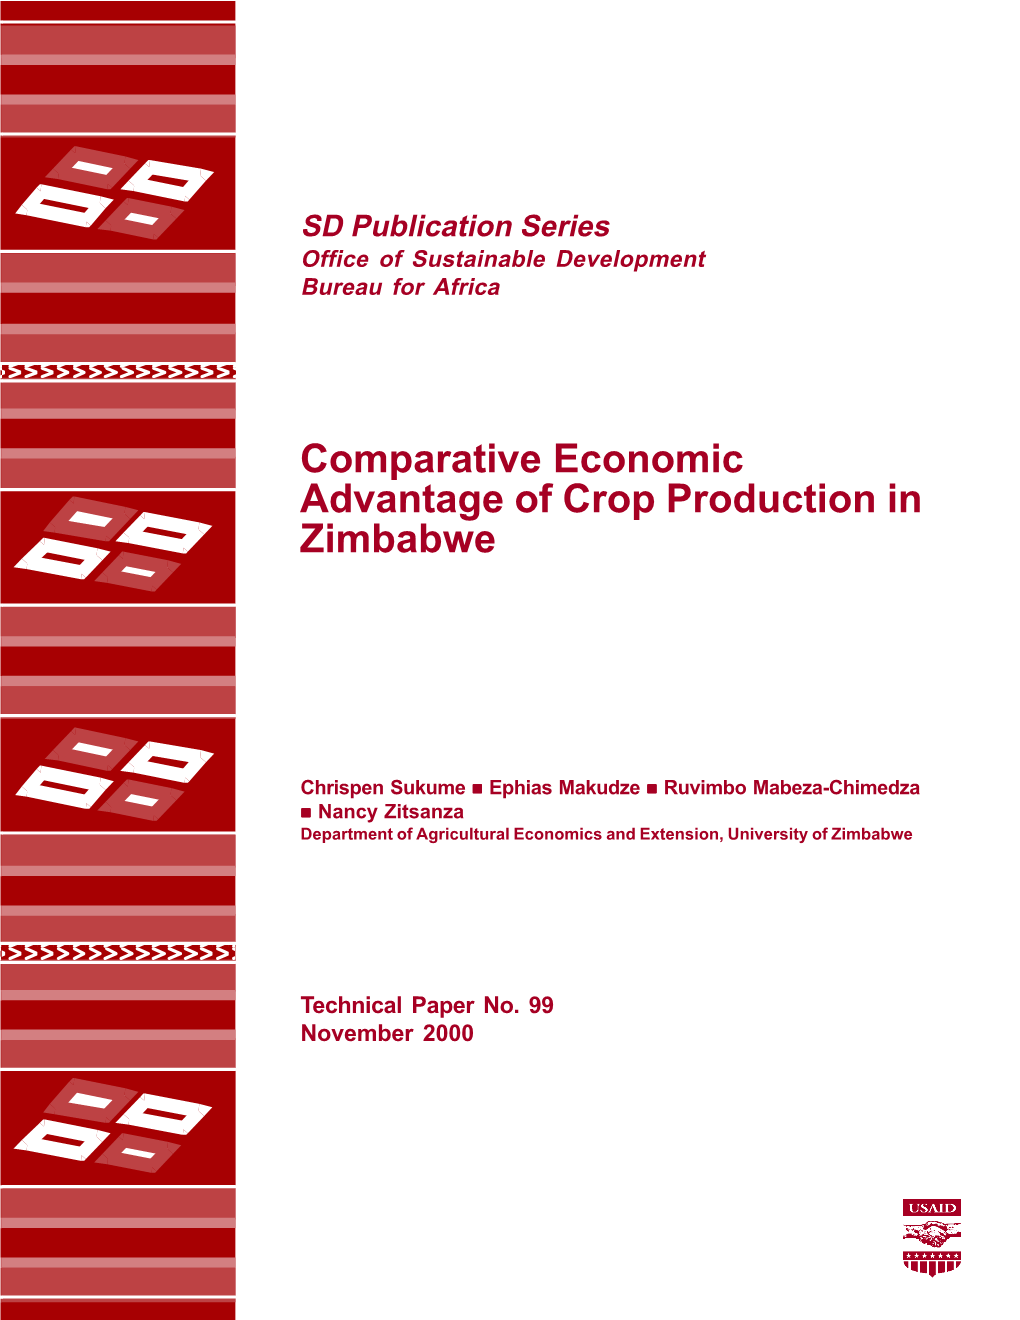 Comparative Economic Advantage of Crop Production in Zimbabwe